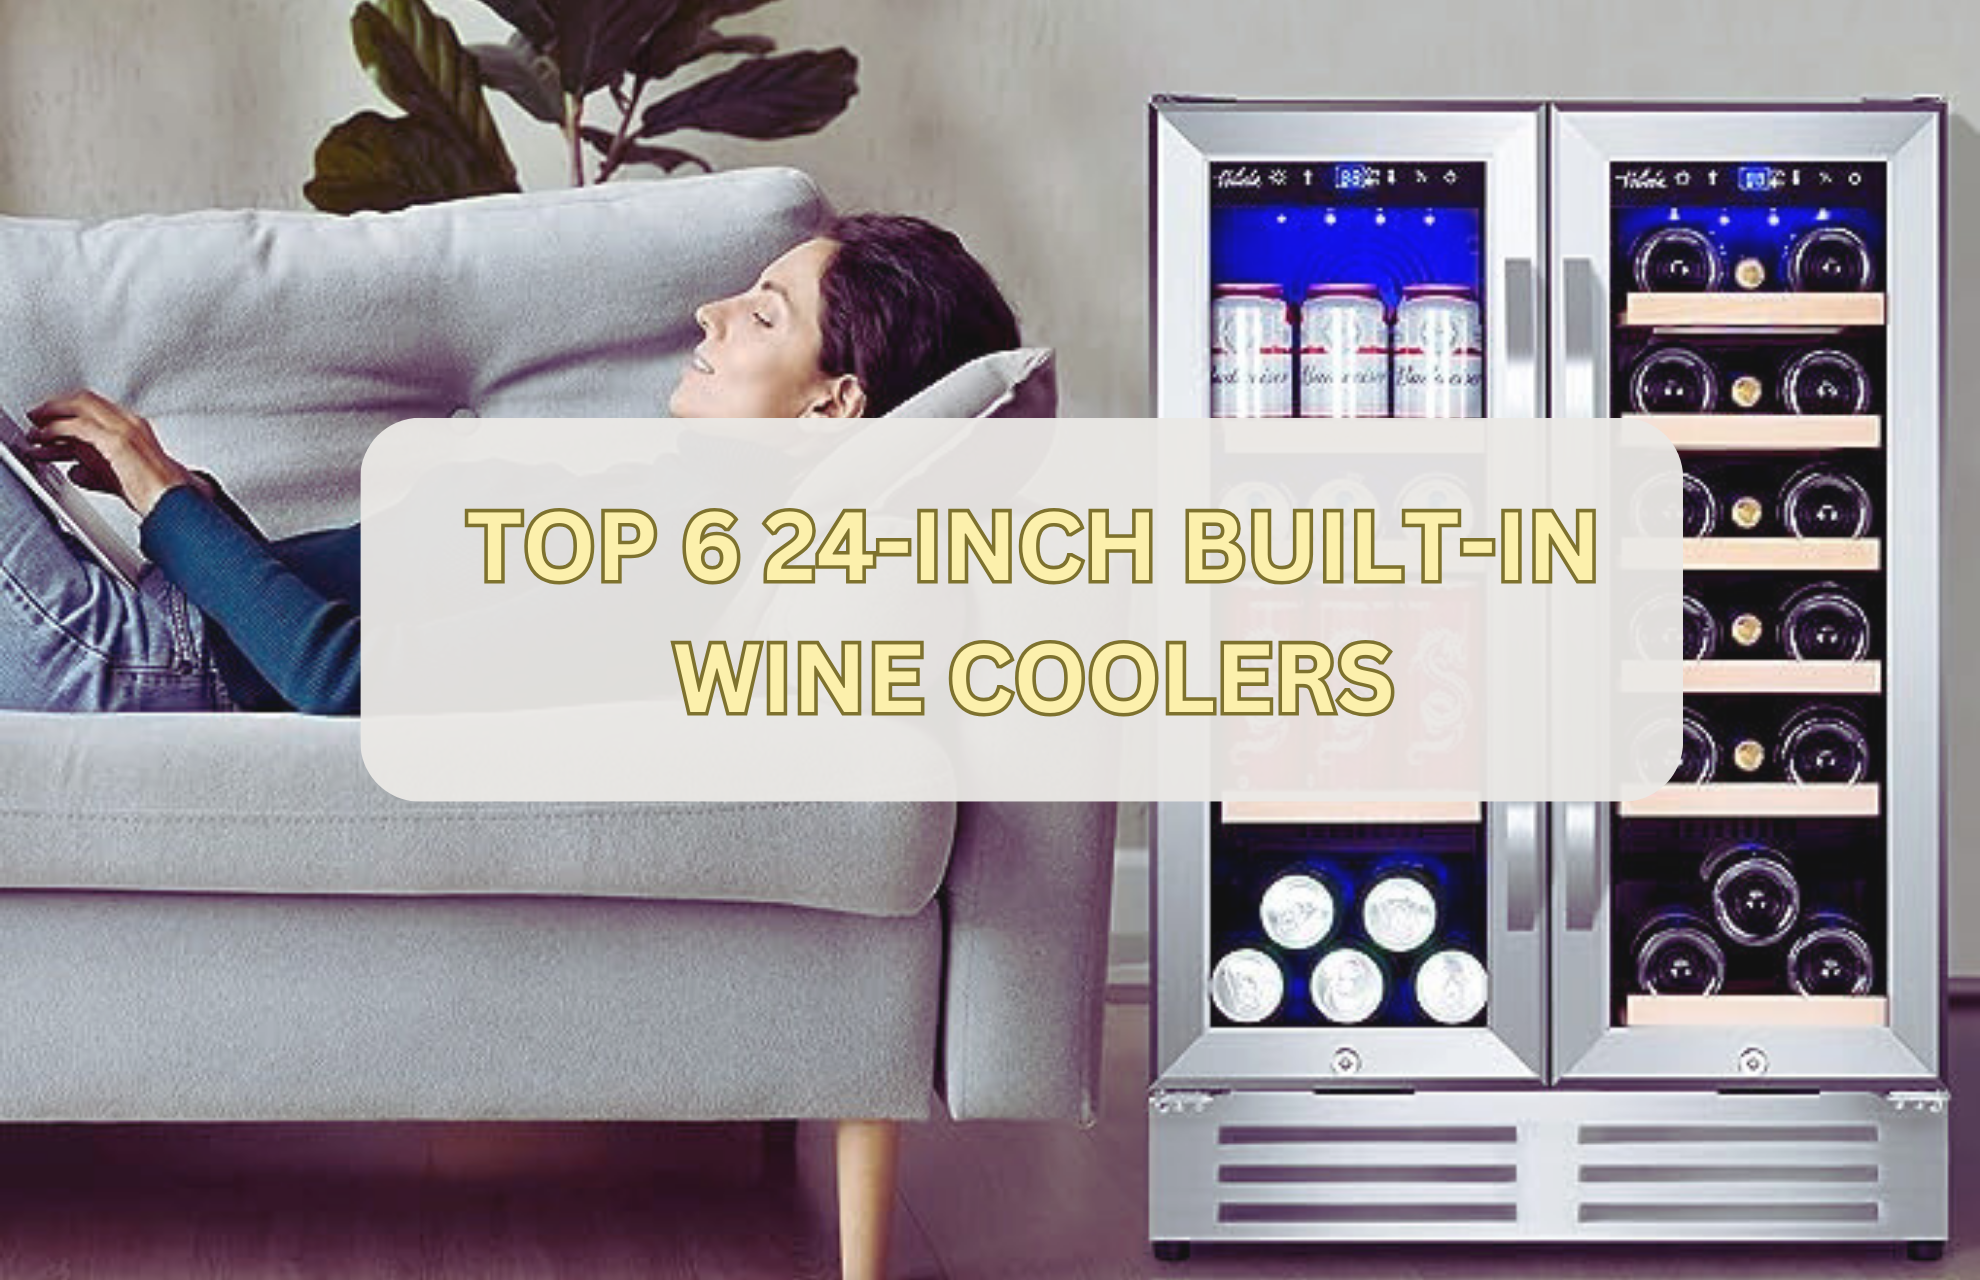 TOP 24 INCH BUILT-IN WINE COOLERS